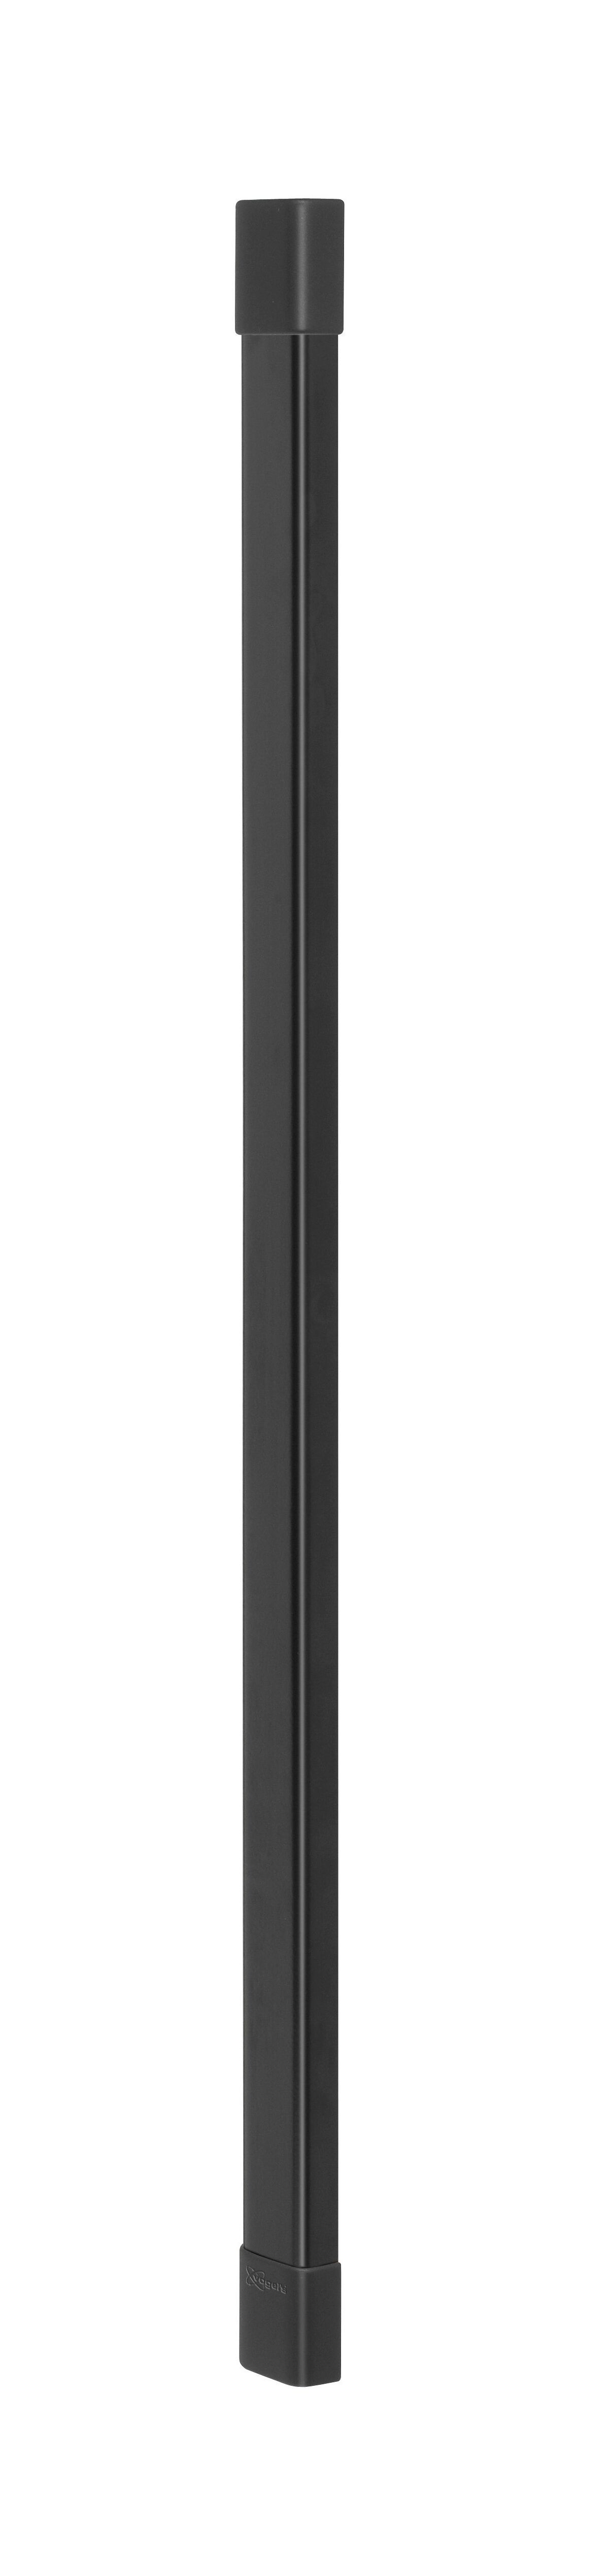 Vogel's CABLE 4 kabelgoot (zwart) - Max. aantal kabels in kabelgoot: Tot 4 kabels - Lengte: Product